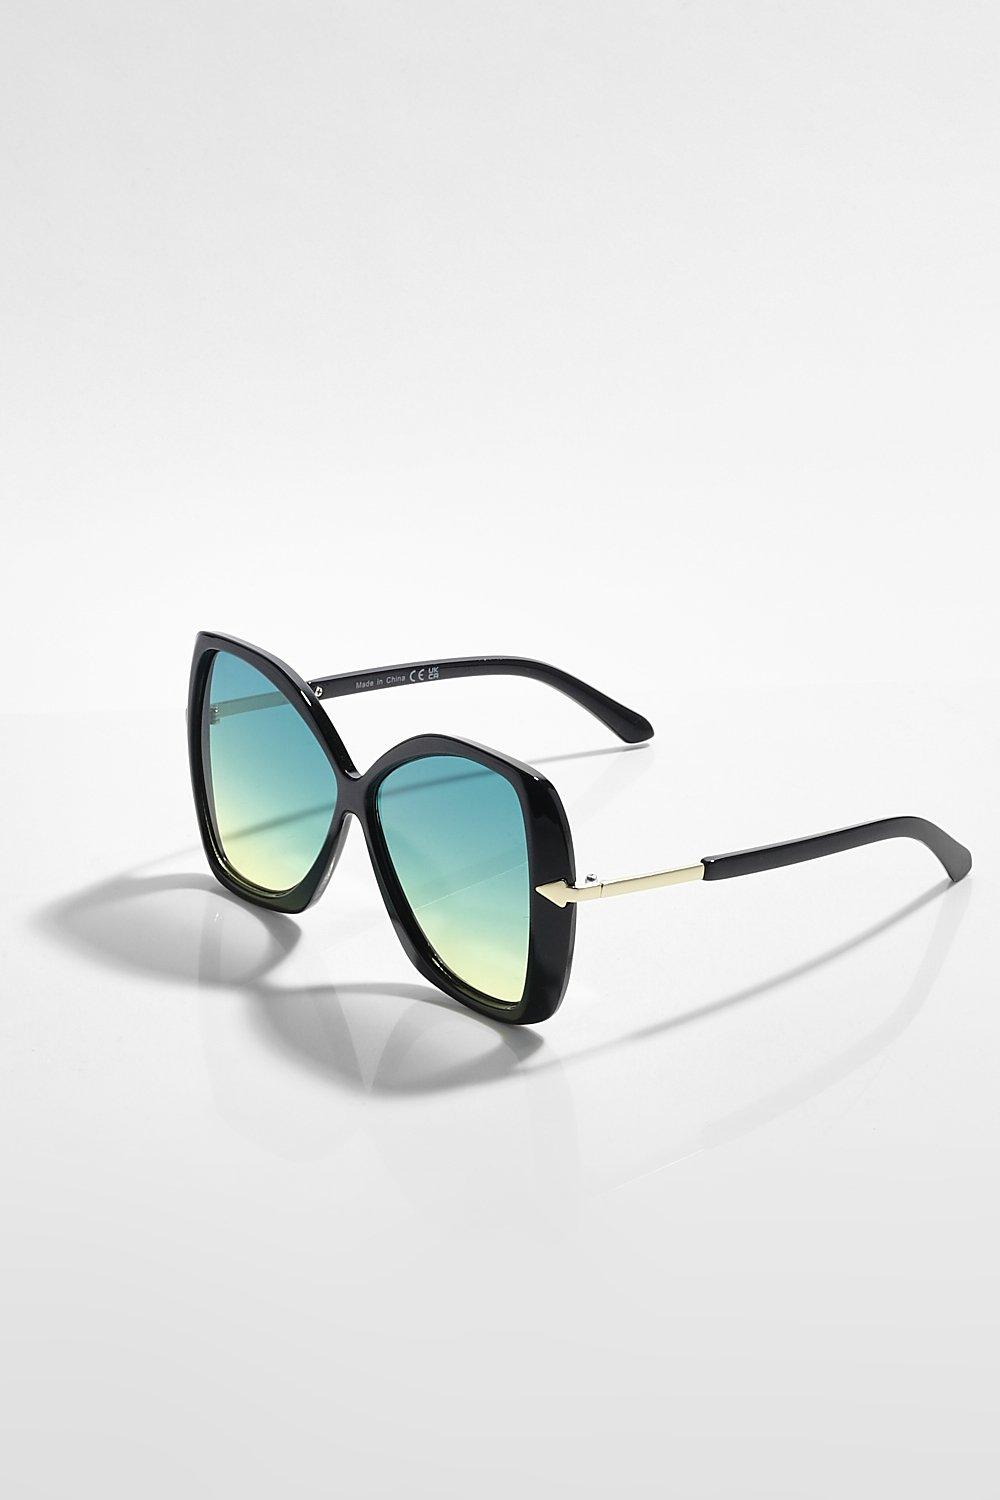 Womens Oversized Tinted Lens Sunglasses - Black - One Size, Black